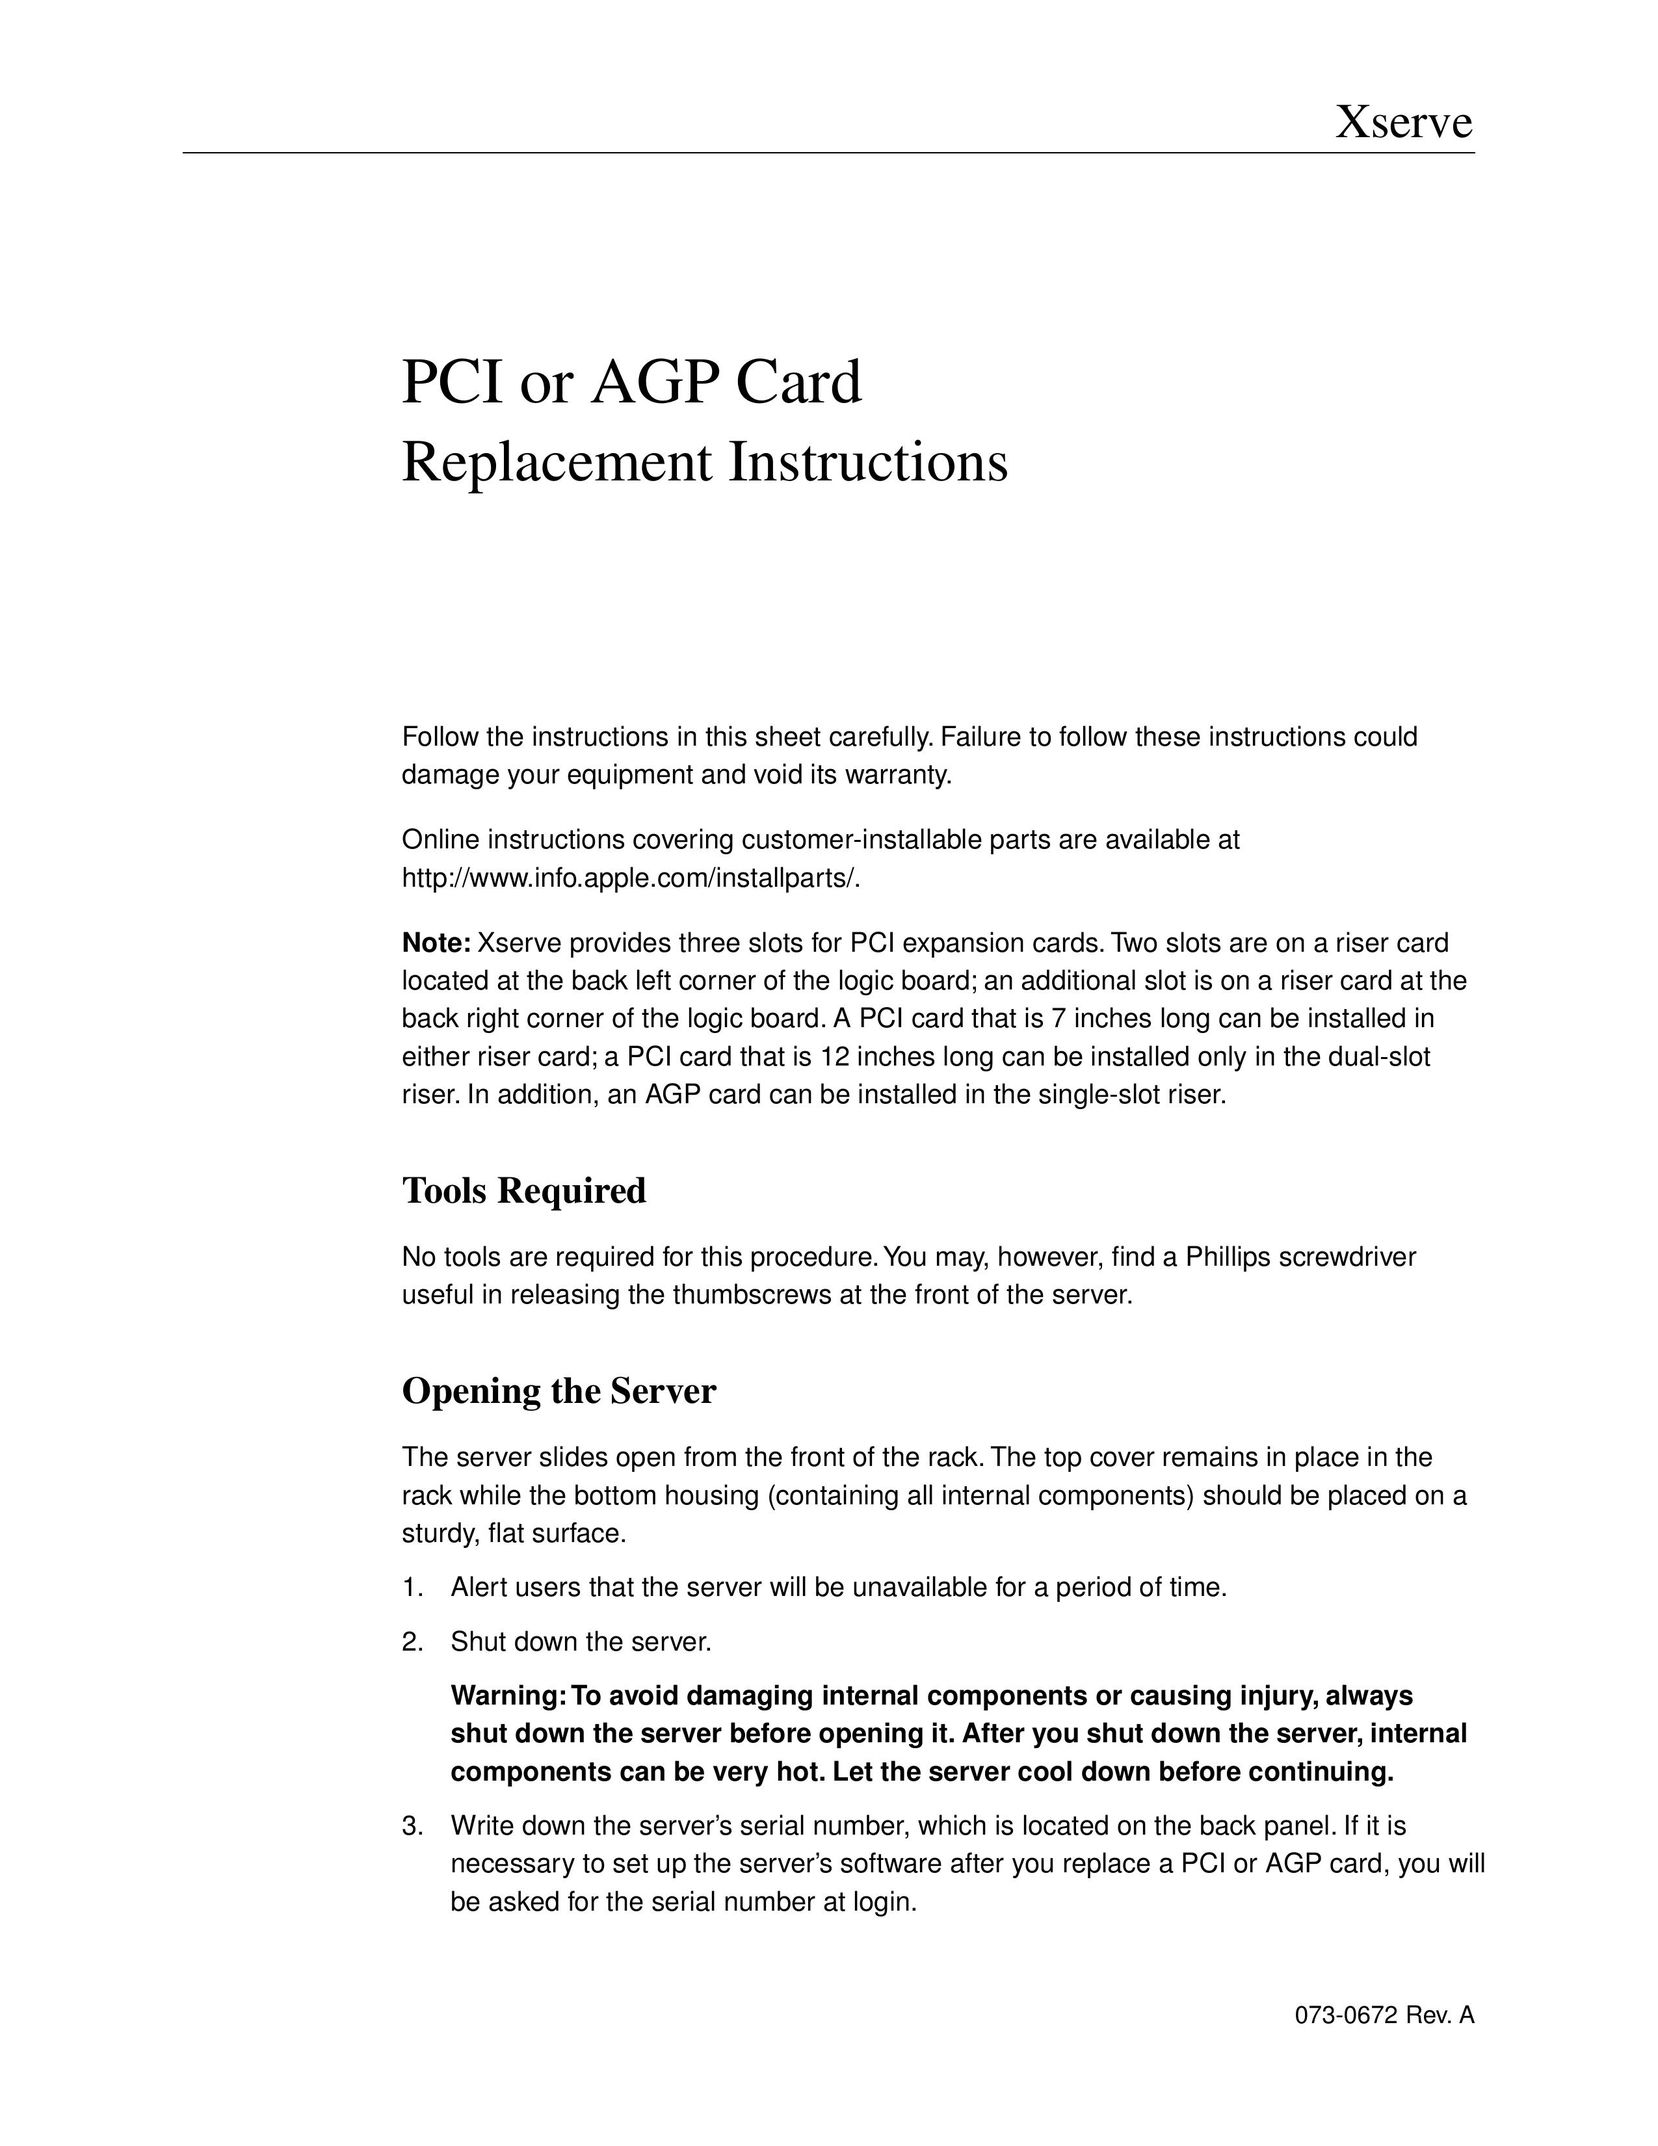 Apple PCI or AGP Card Network Card User Manual